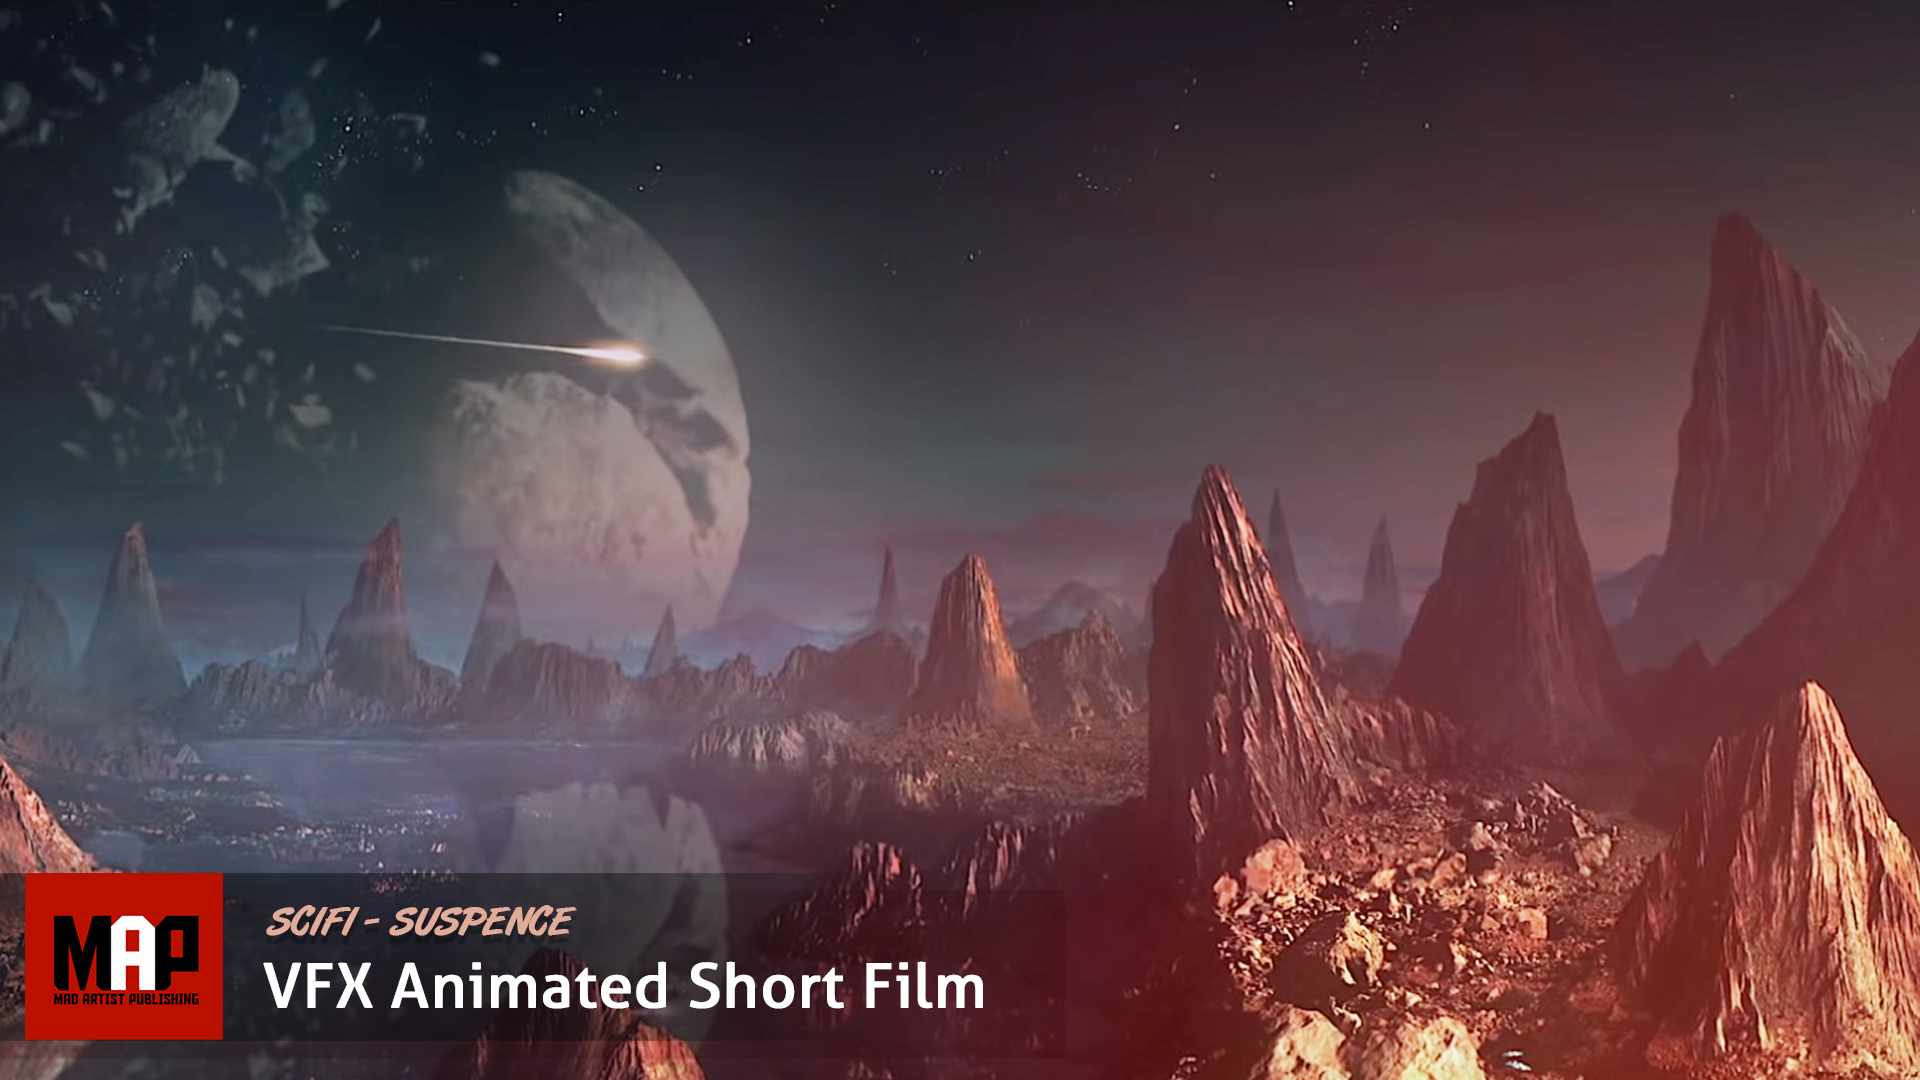 CGI VFX Animated Short Film ** ATMOSPHERE ** Award Winning Animation by NAD - UQAC Team